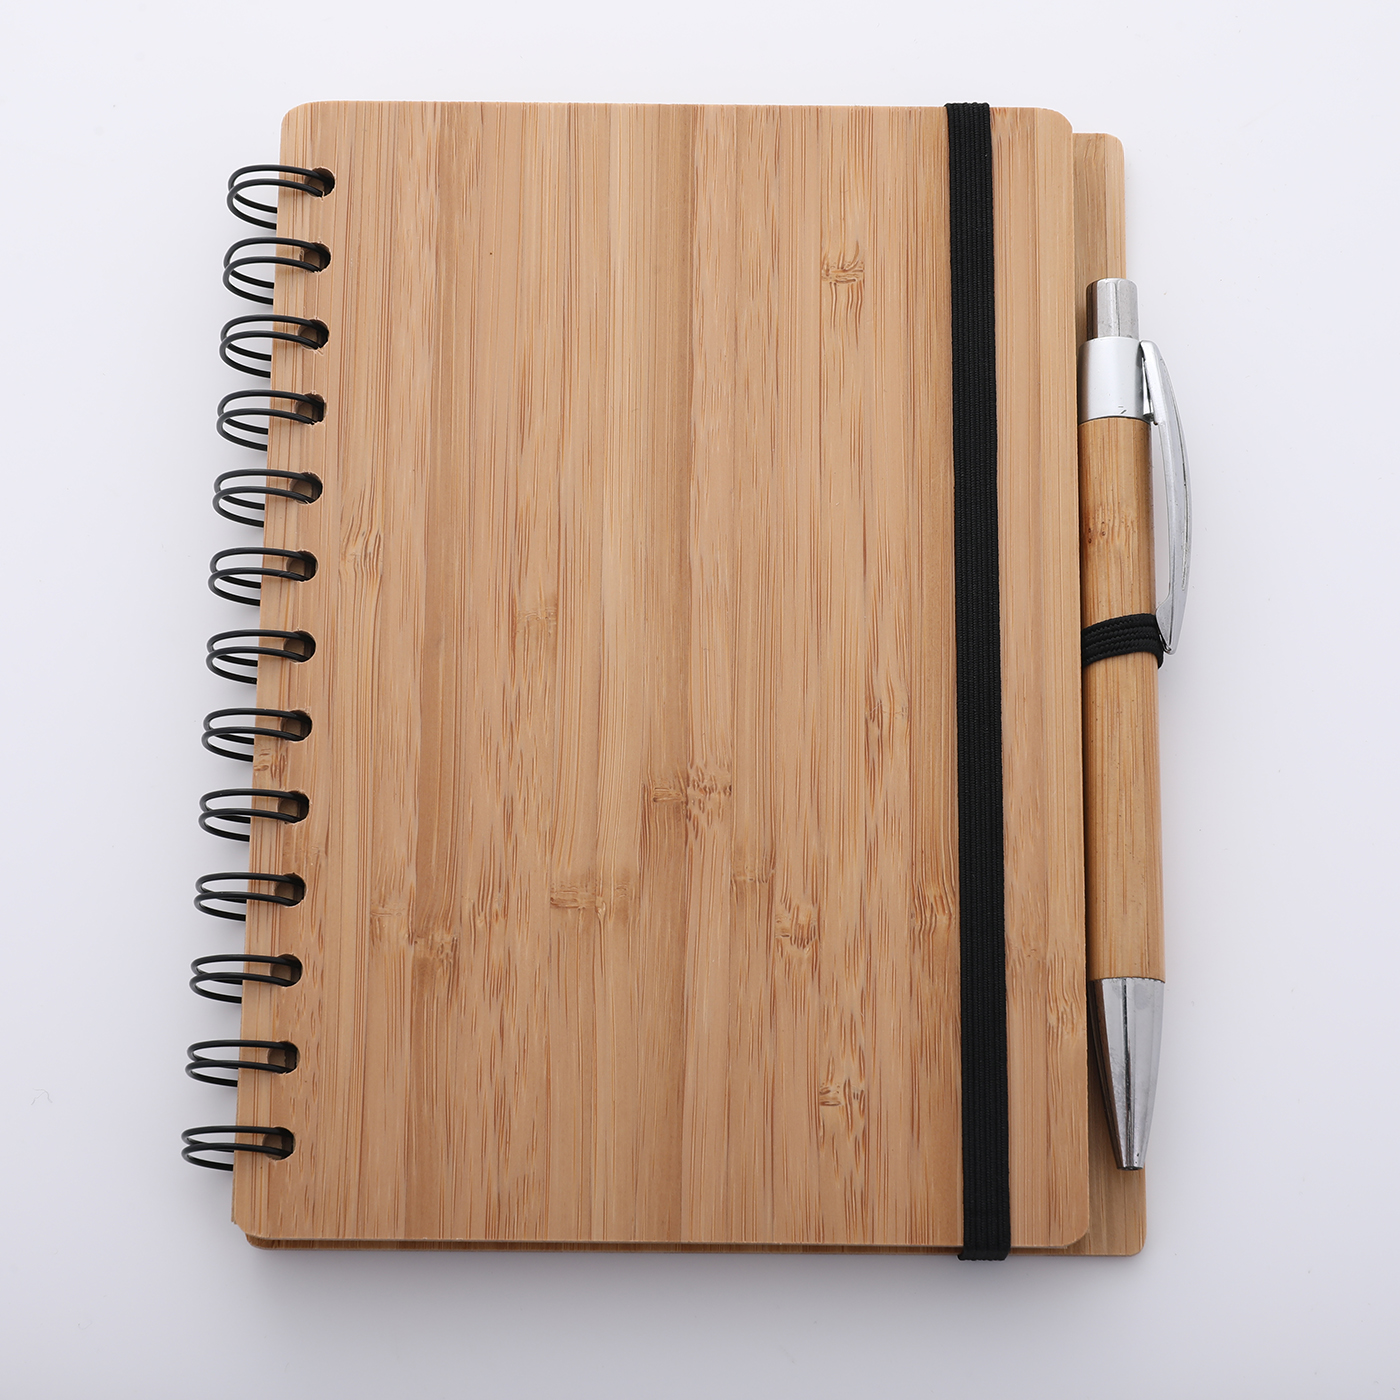 Bamboo Spiral Notebook With Ballpoint Pen4